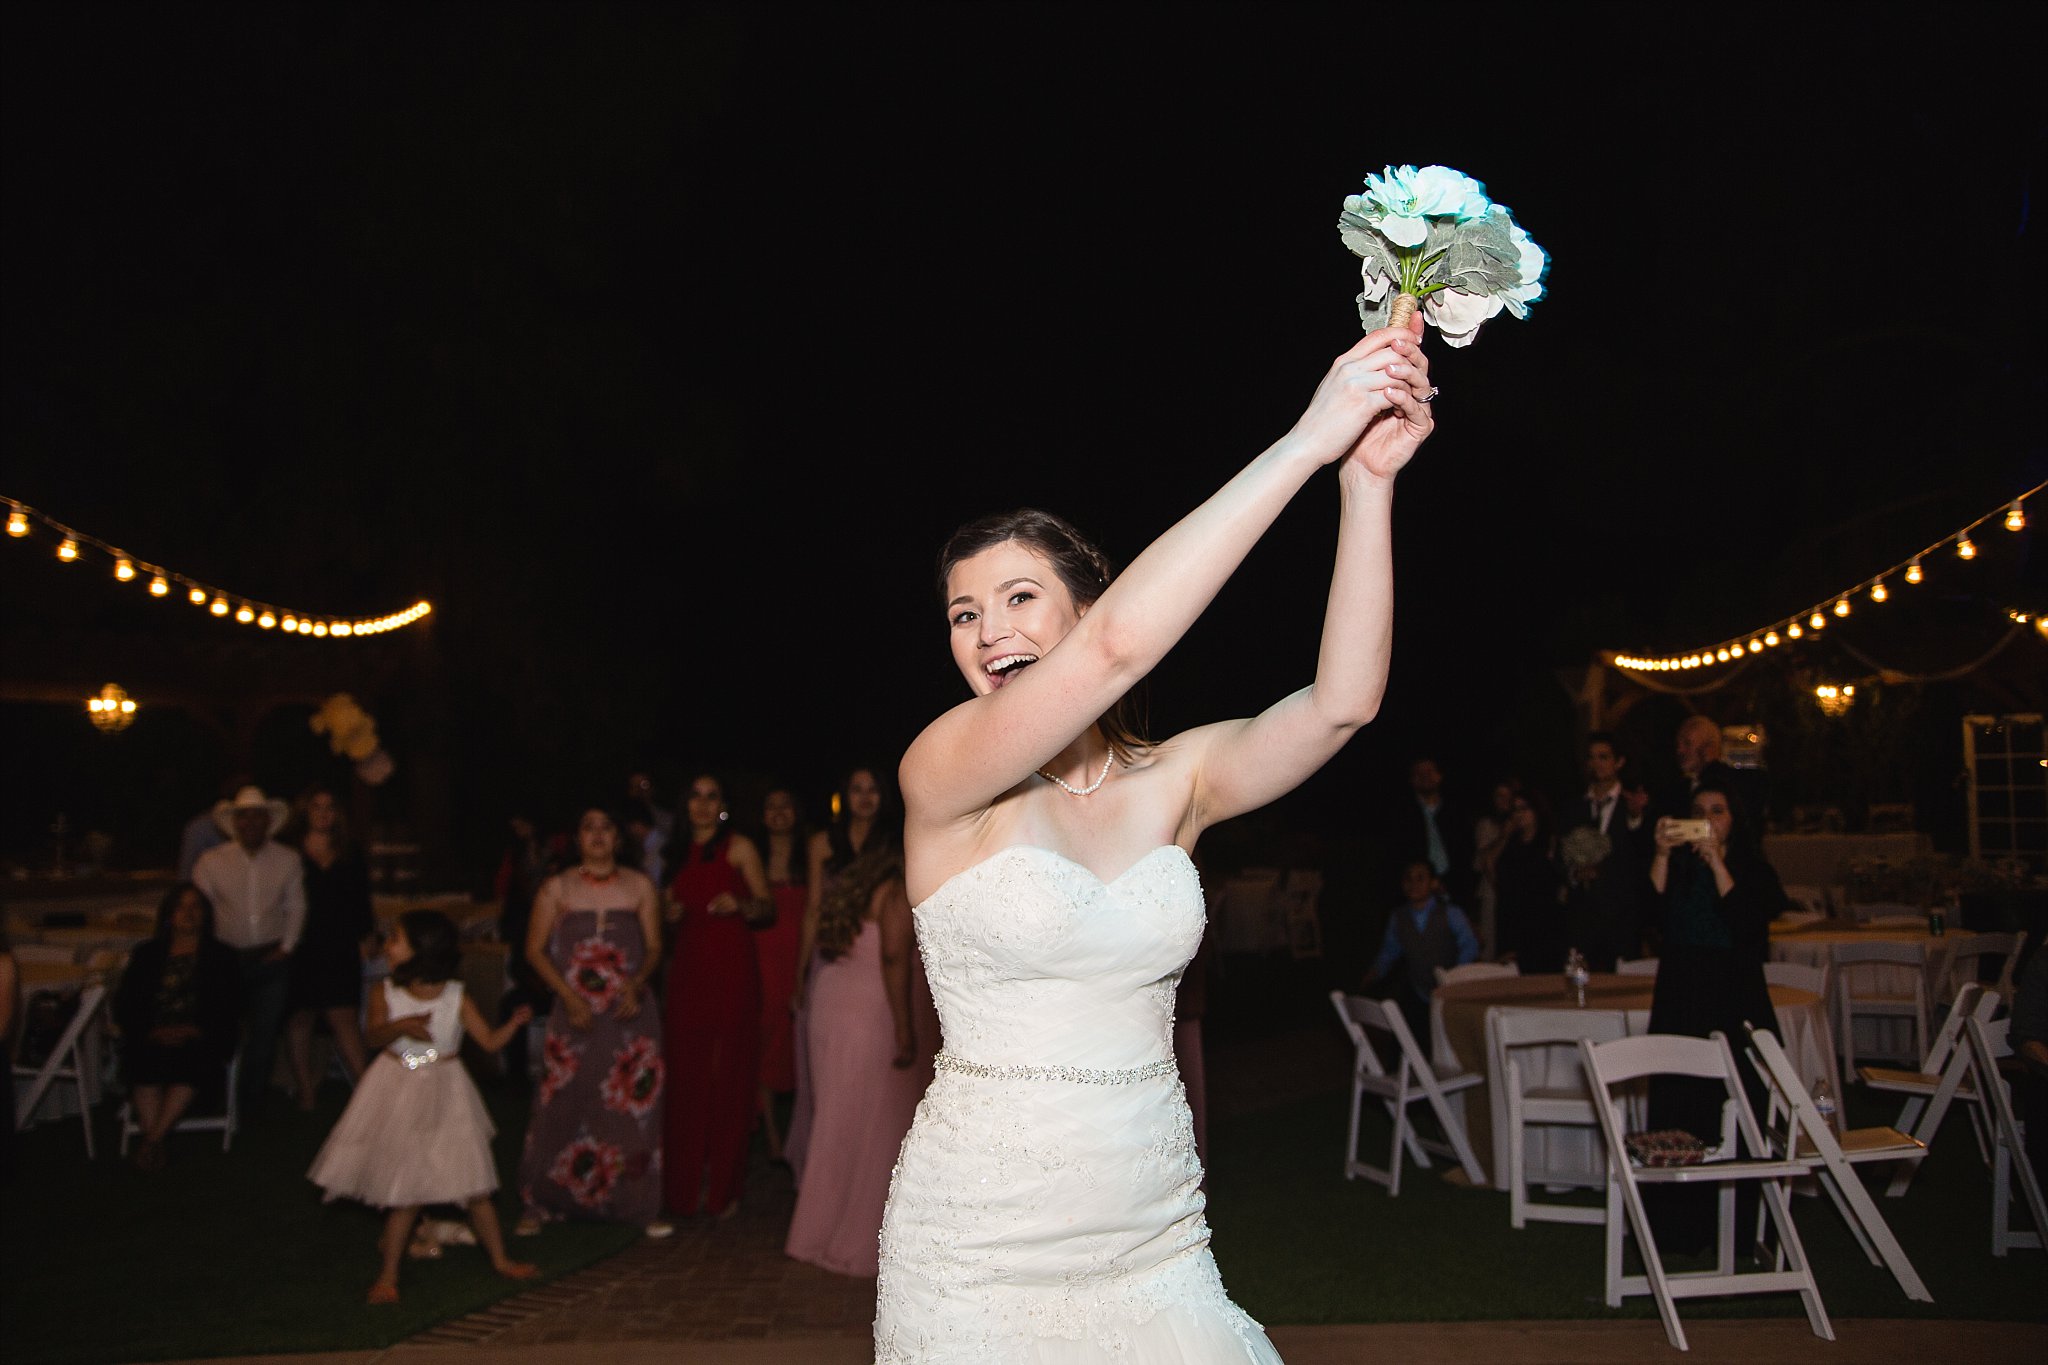 Bouquet toss at Schnepf Farms wedding reception by Queen Creek wedding photographer PMA Photography.